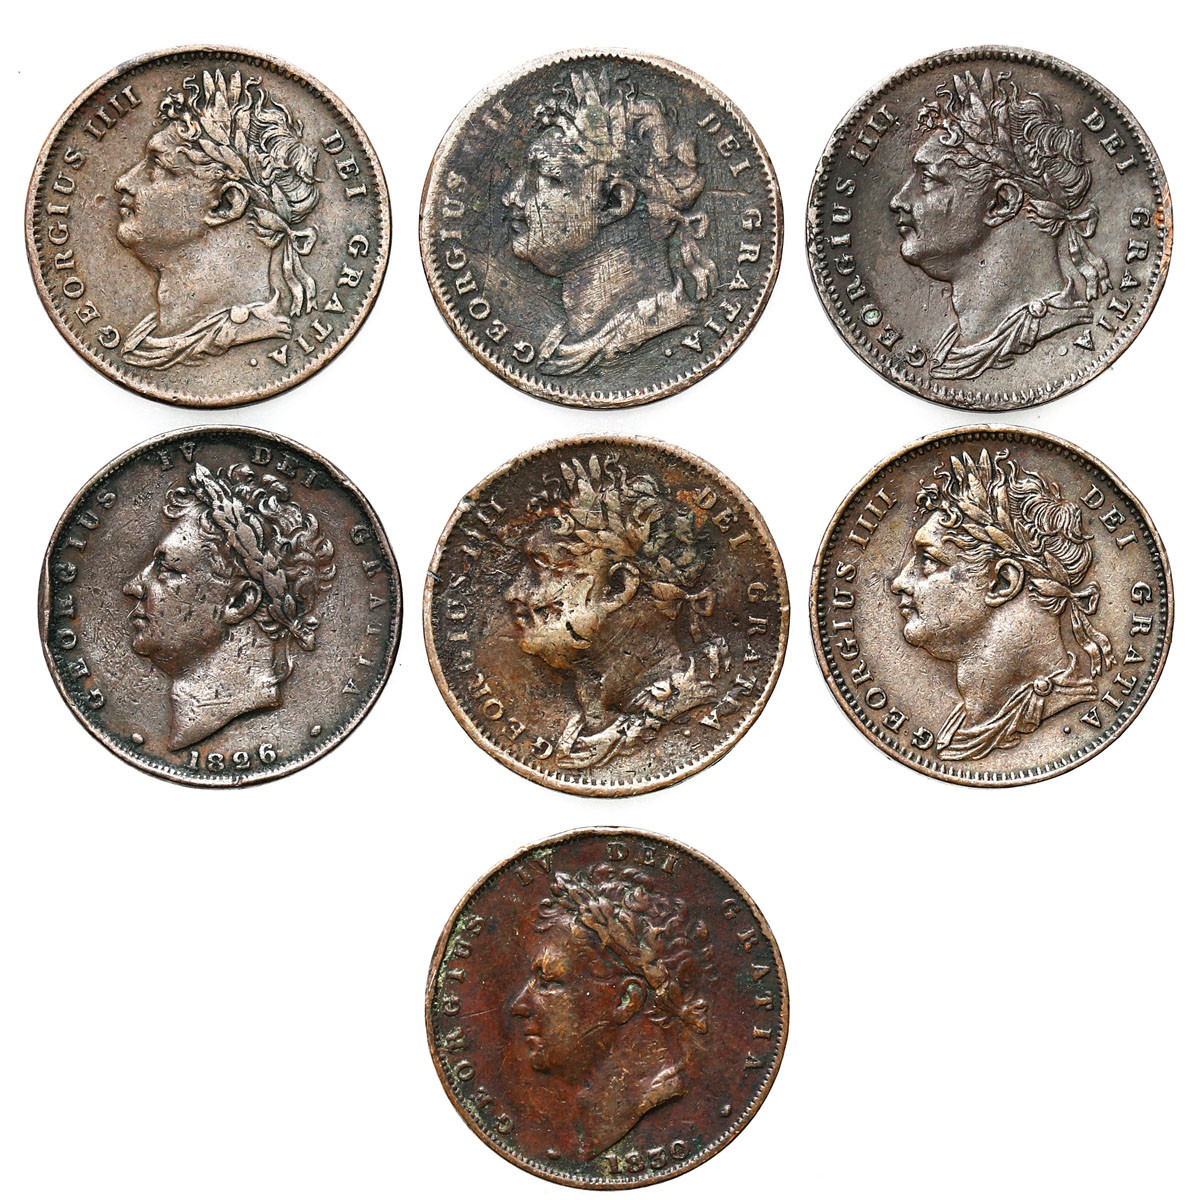 Wielka Brytania. George IV (1820-1830). Farthing 1821-1830, zestaw 7 monet